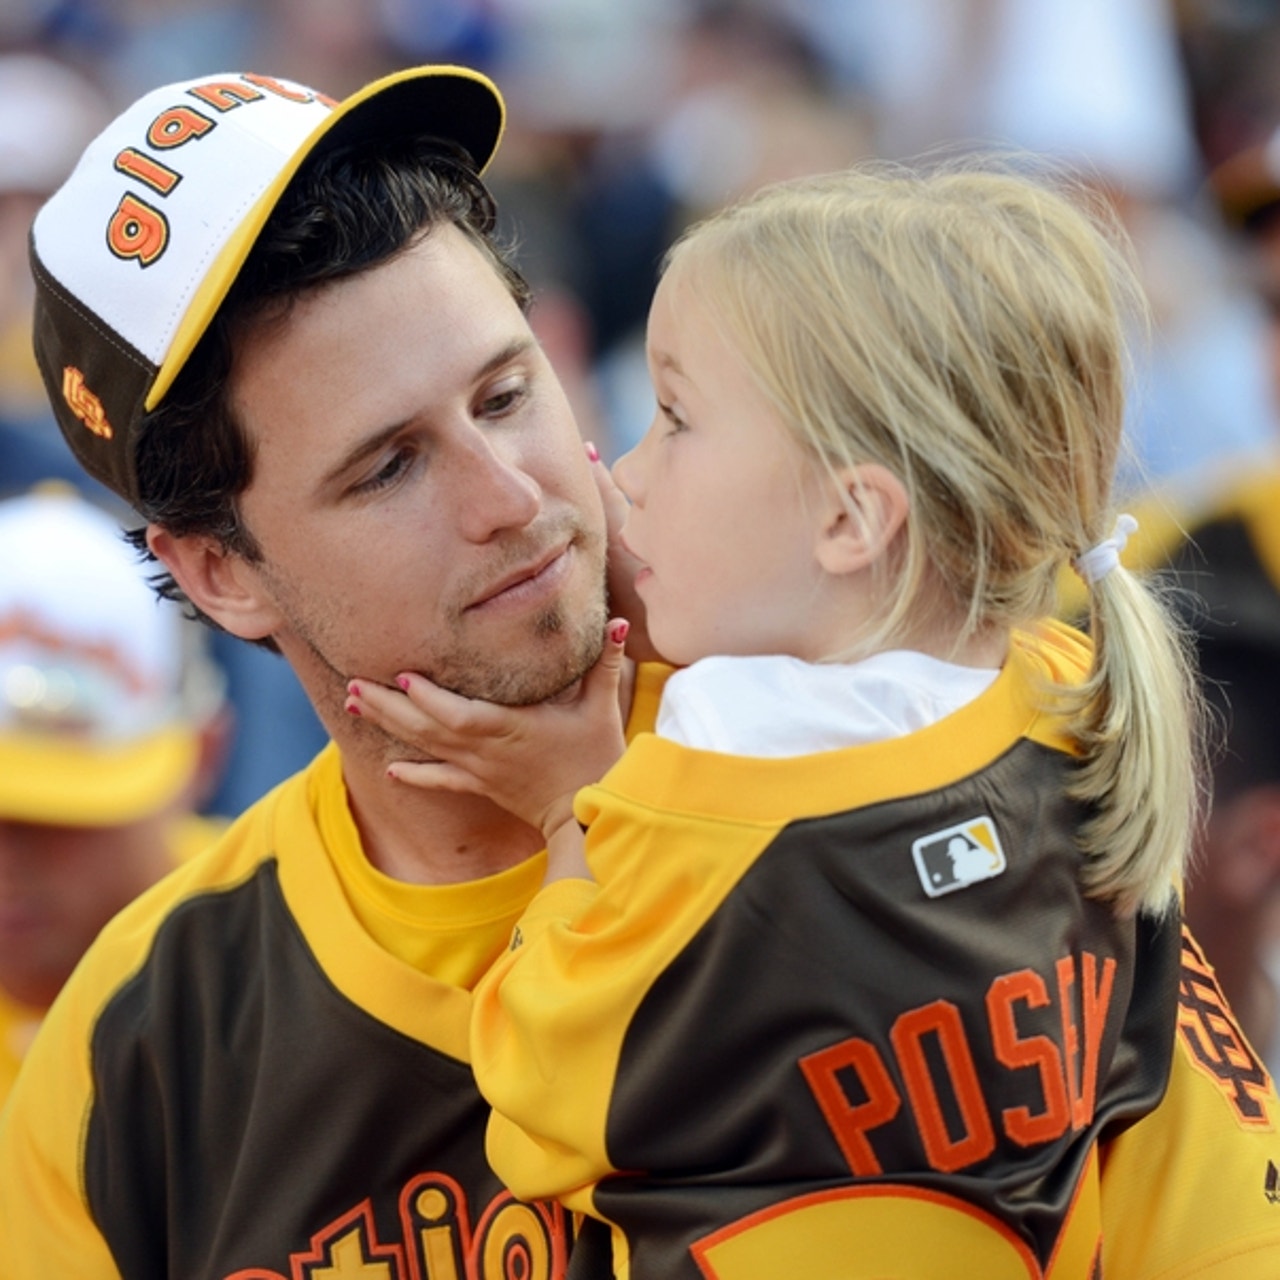 Buster Posey skipping MLB season for his babies is a huge sacrifice